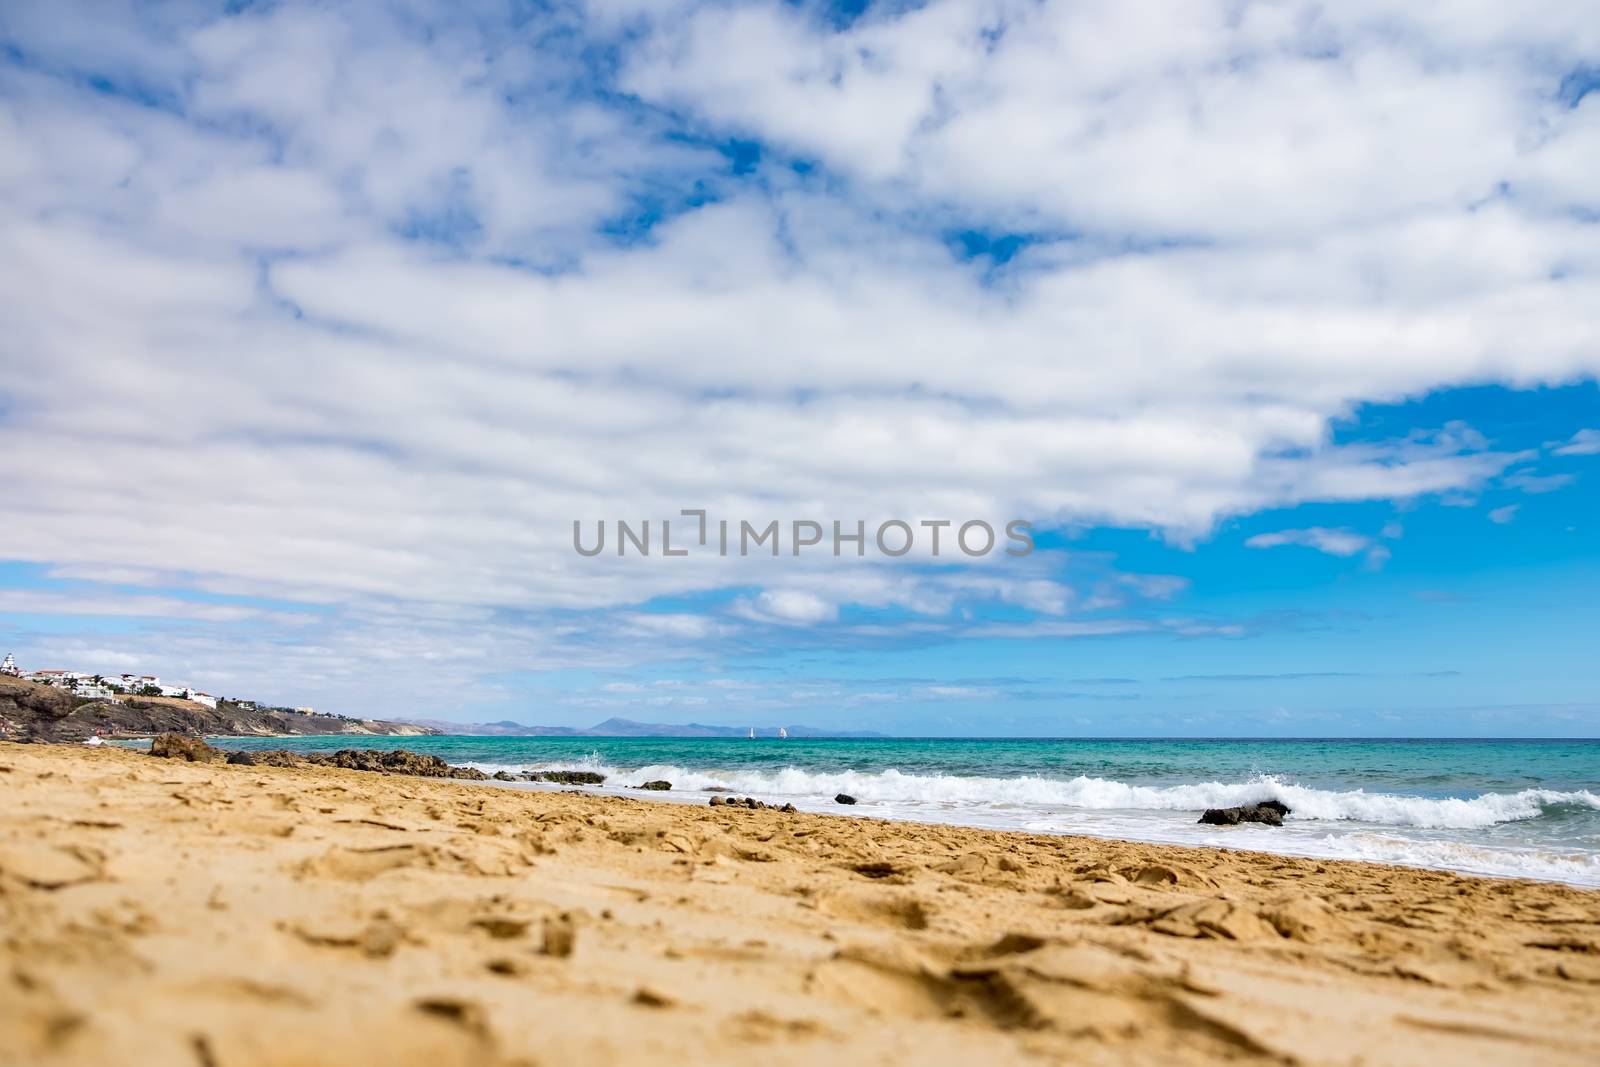 Coast and beach in sunshine on the Spanish island Fuerteventura